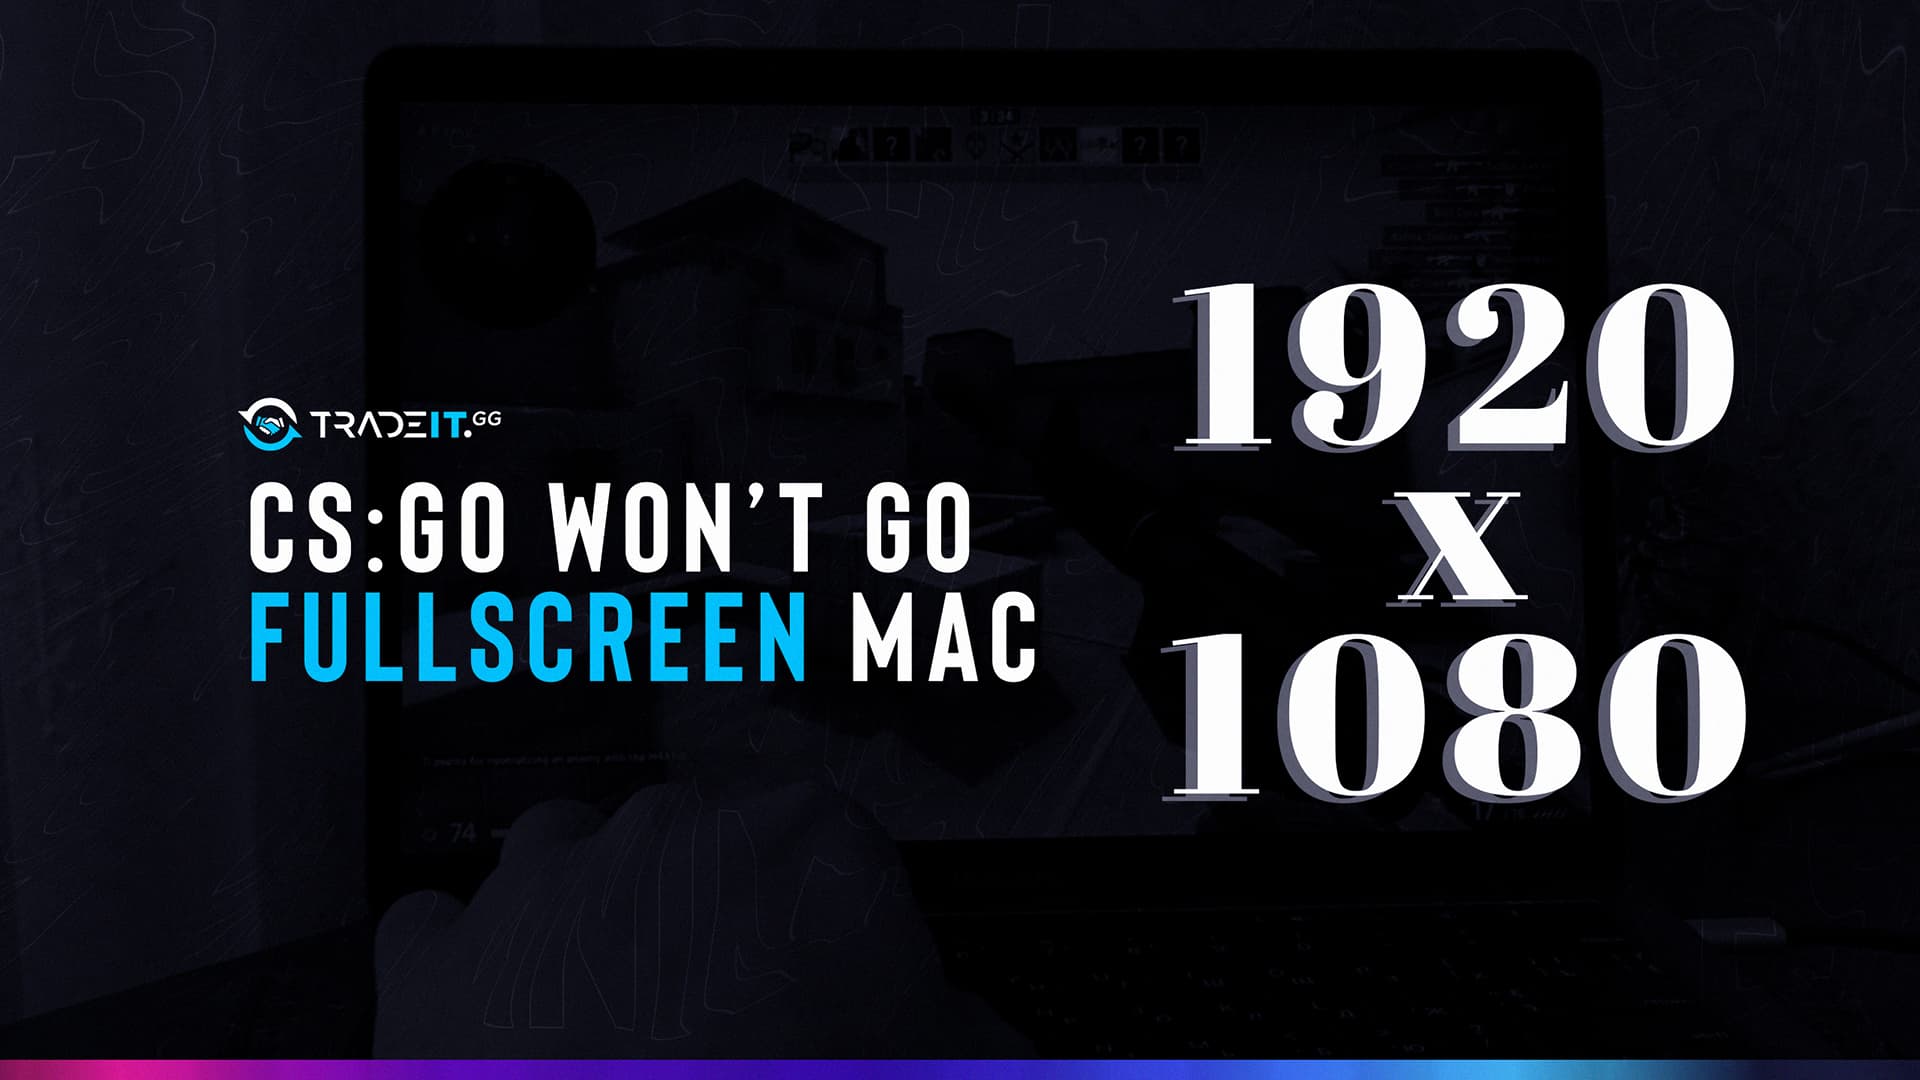 CS:GO Won't Go Fullscreen on Mac